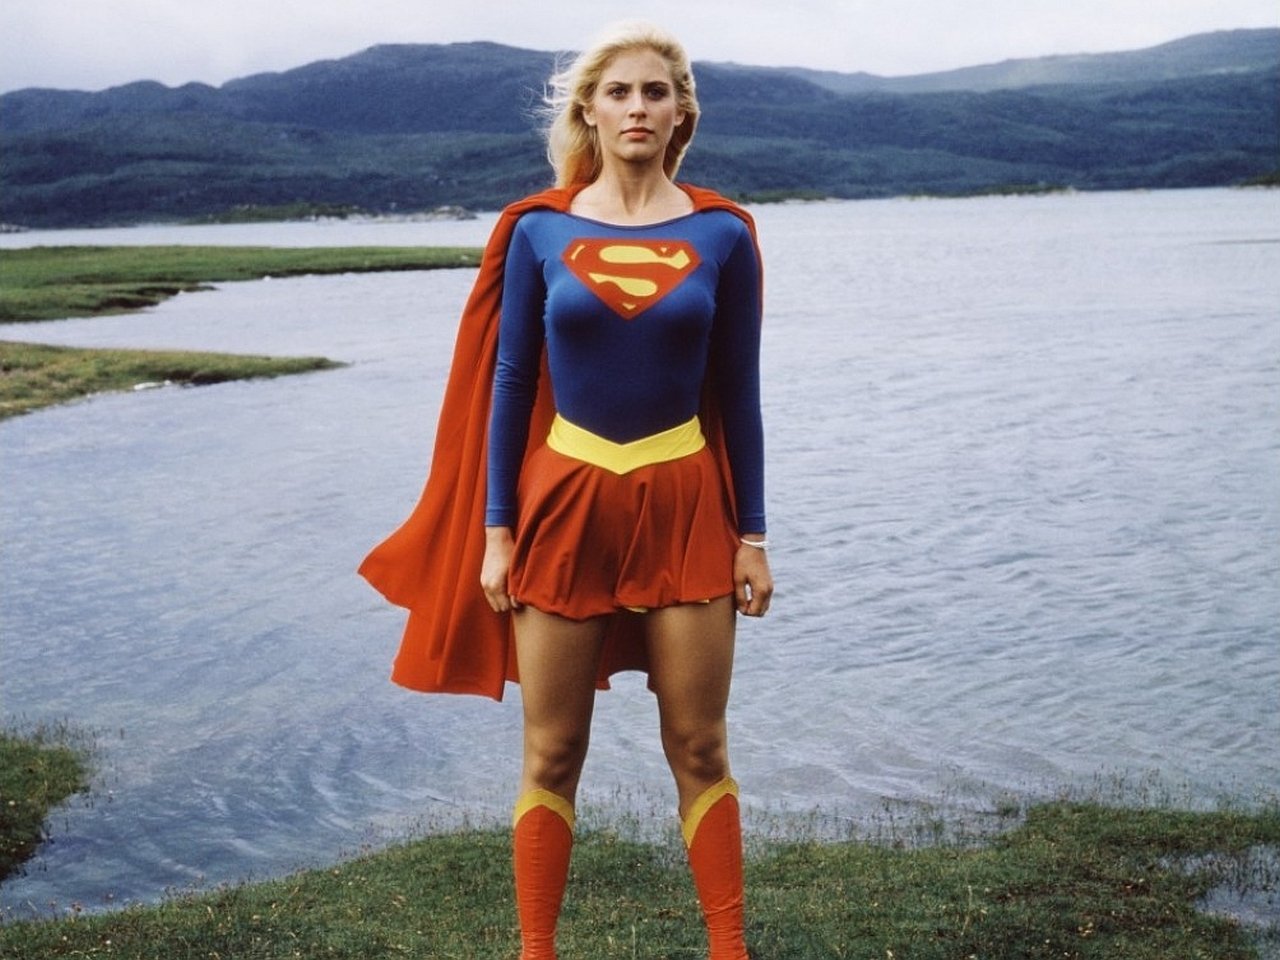 s later wallpaper,superhero,superman,fictional character,justice league,costume